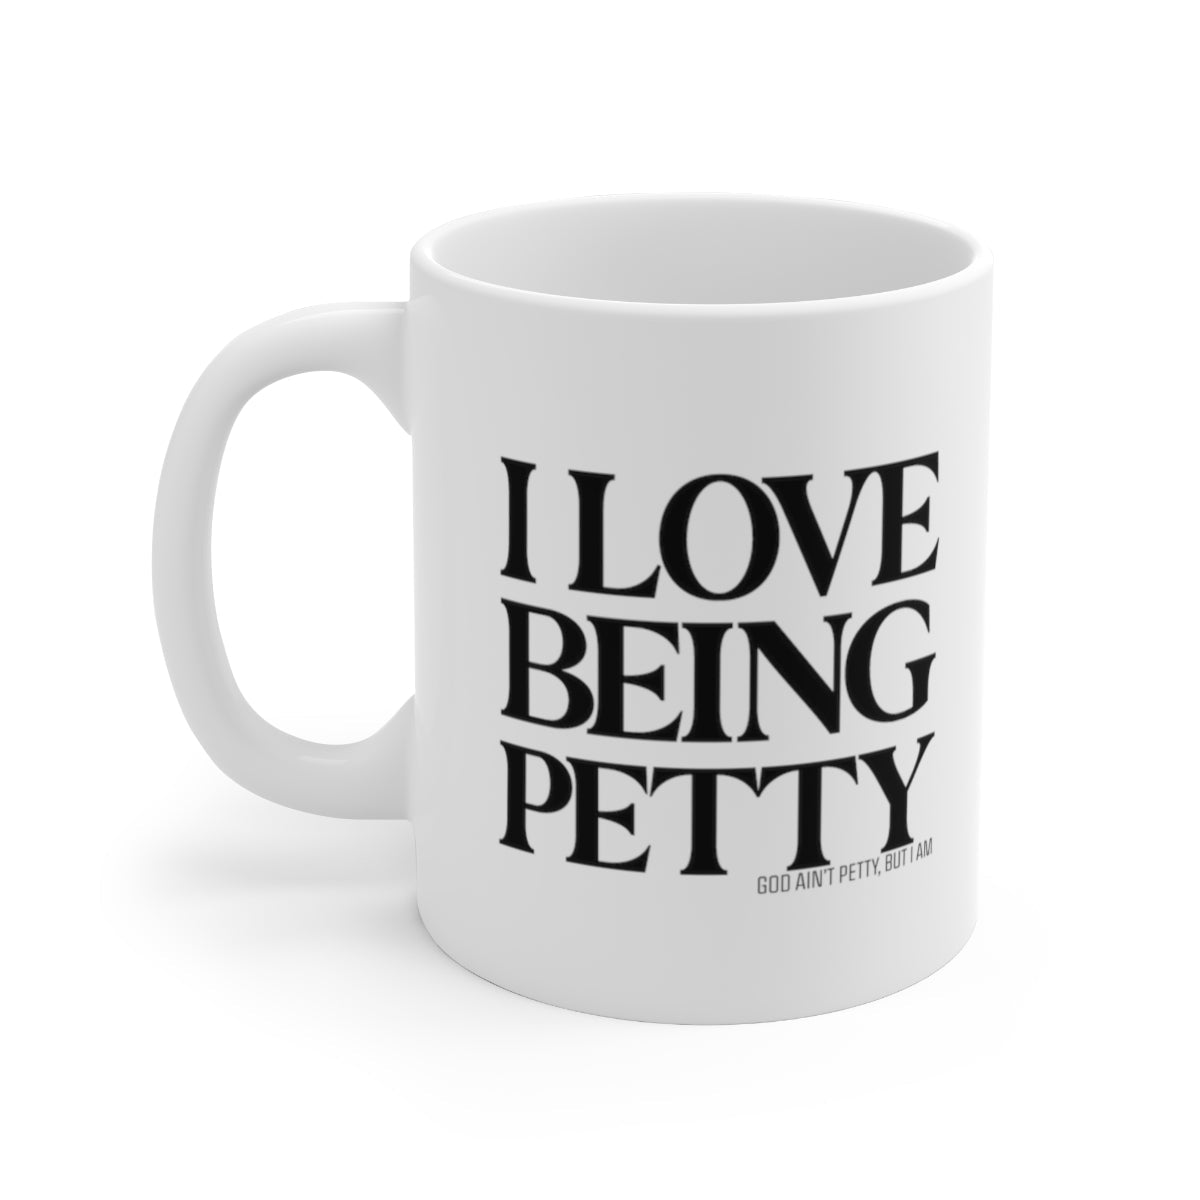 I Love being Petty Mug 11oz (White/Black)-Mug-The Original God Ain't Petty But I Am